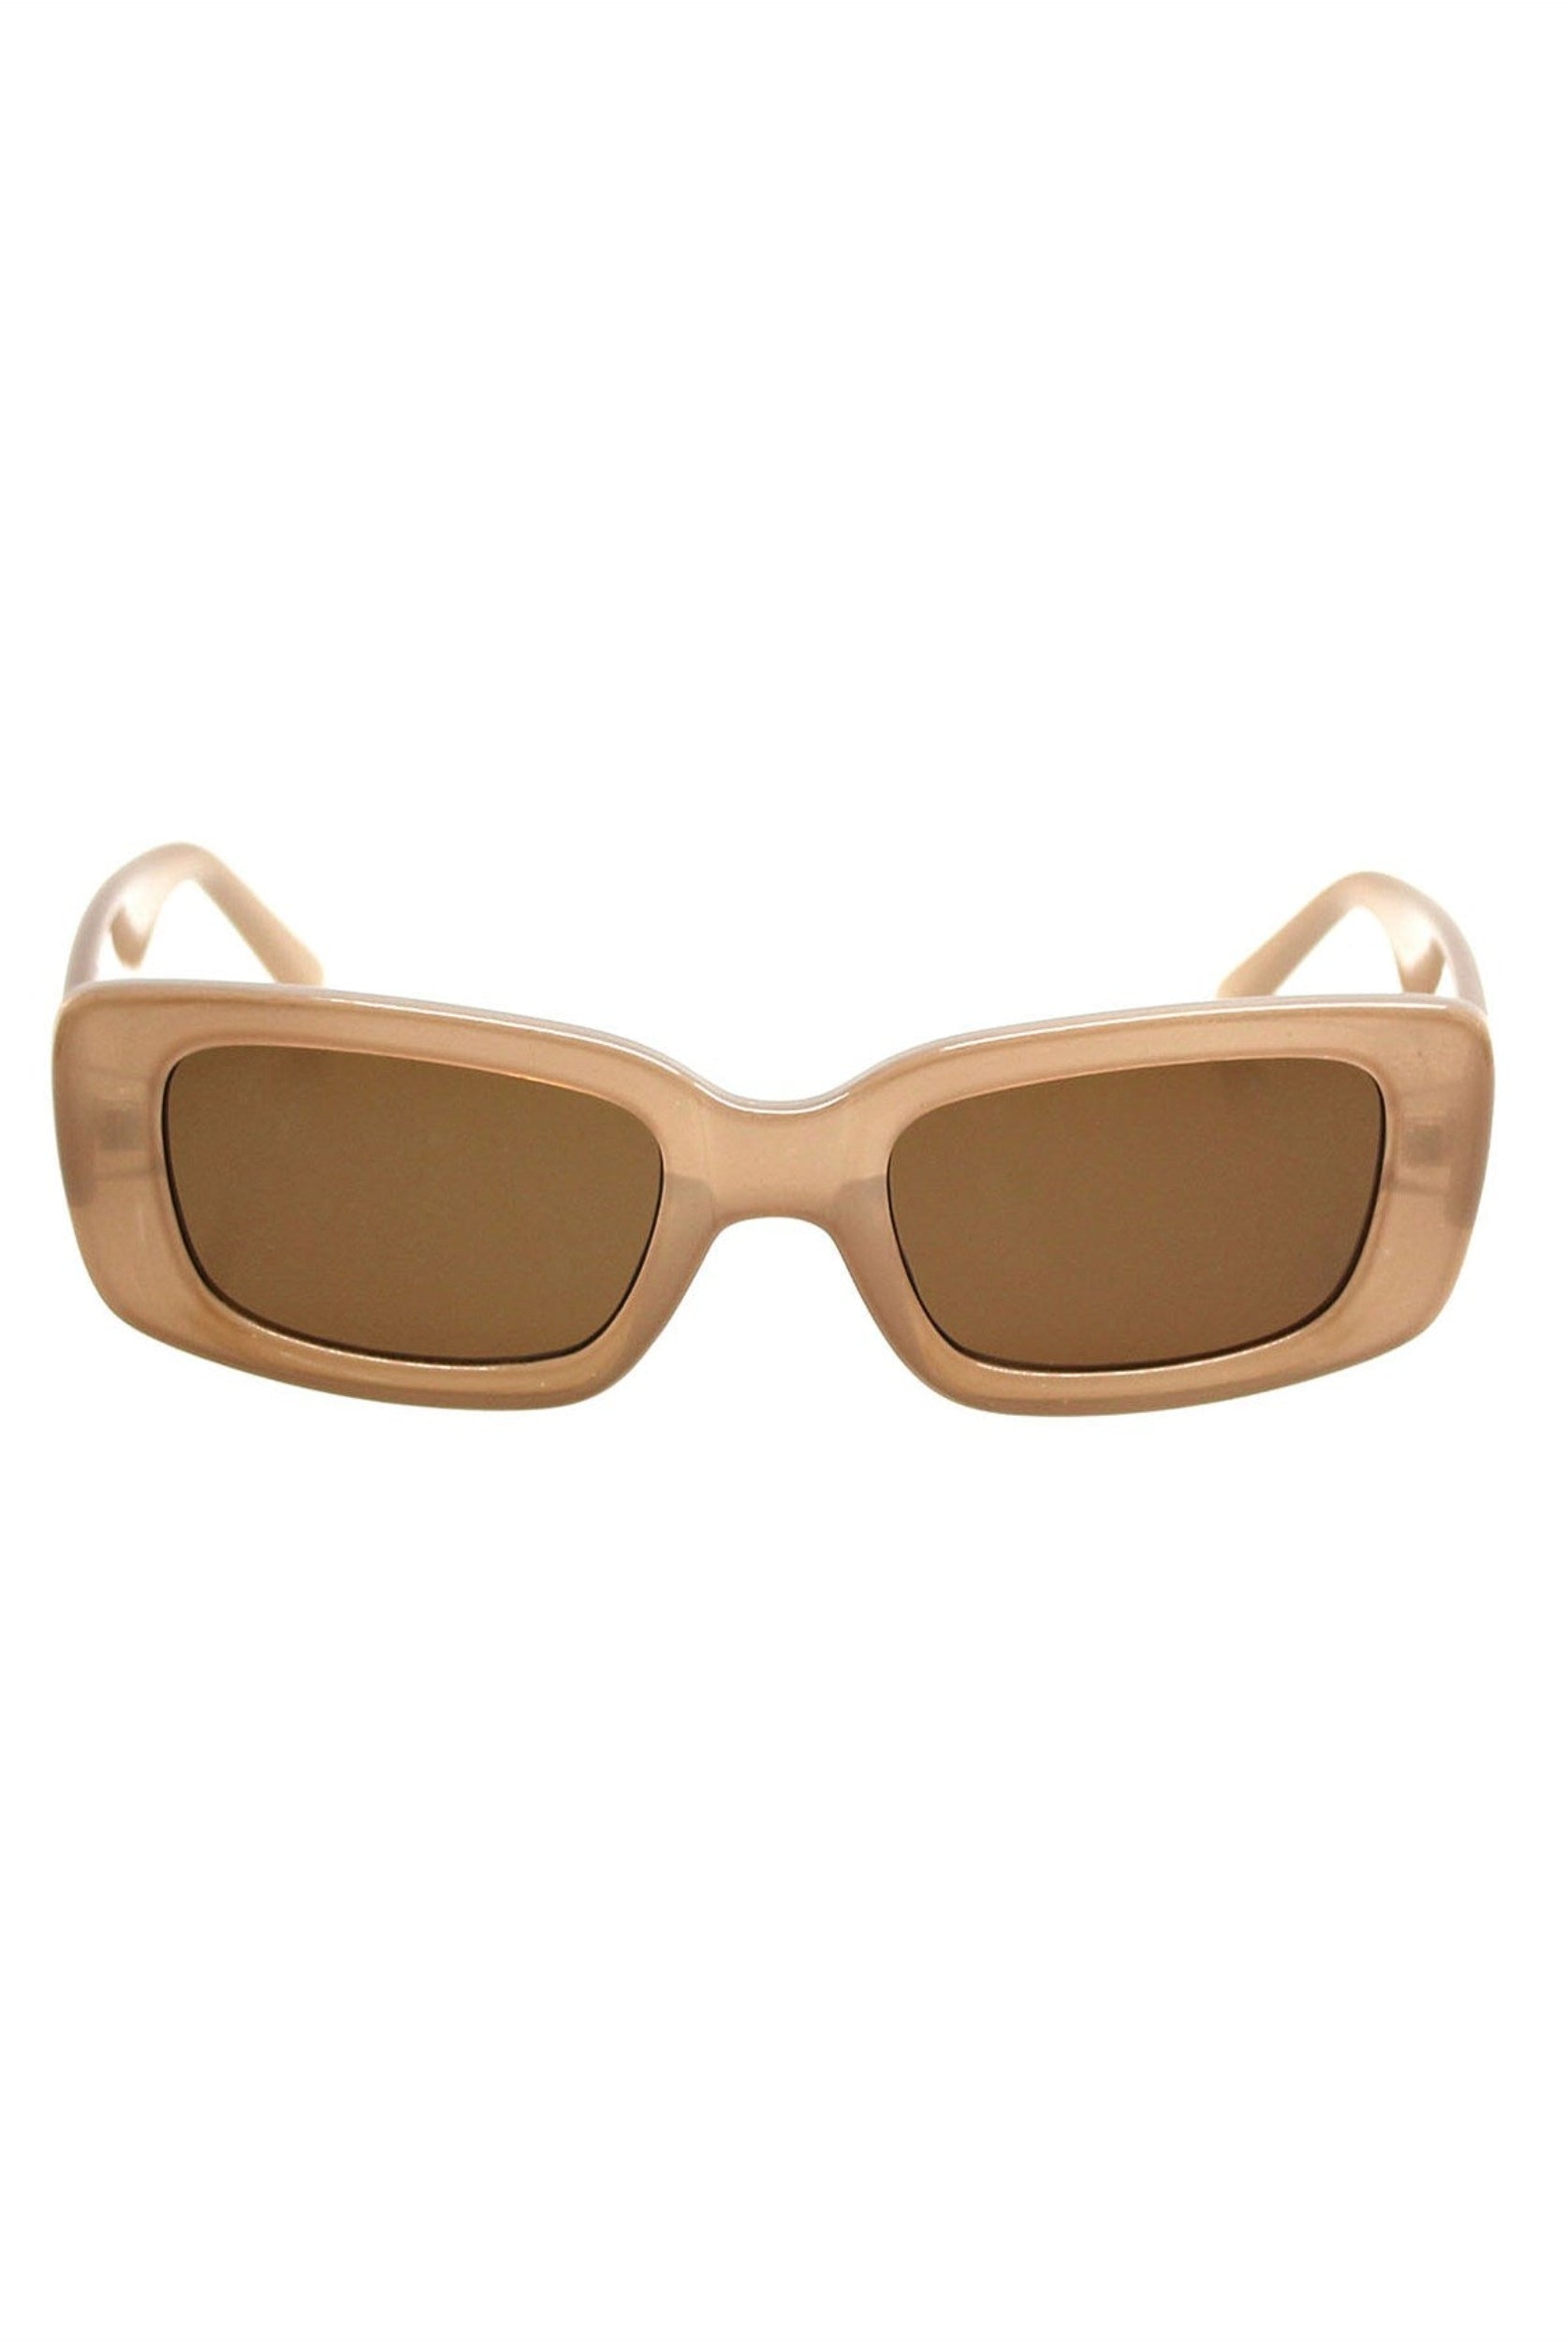 Bianca Sunglasses in Nude from Reality Eyewear